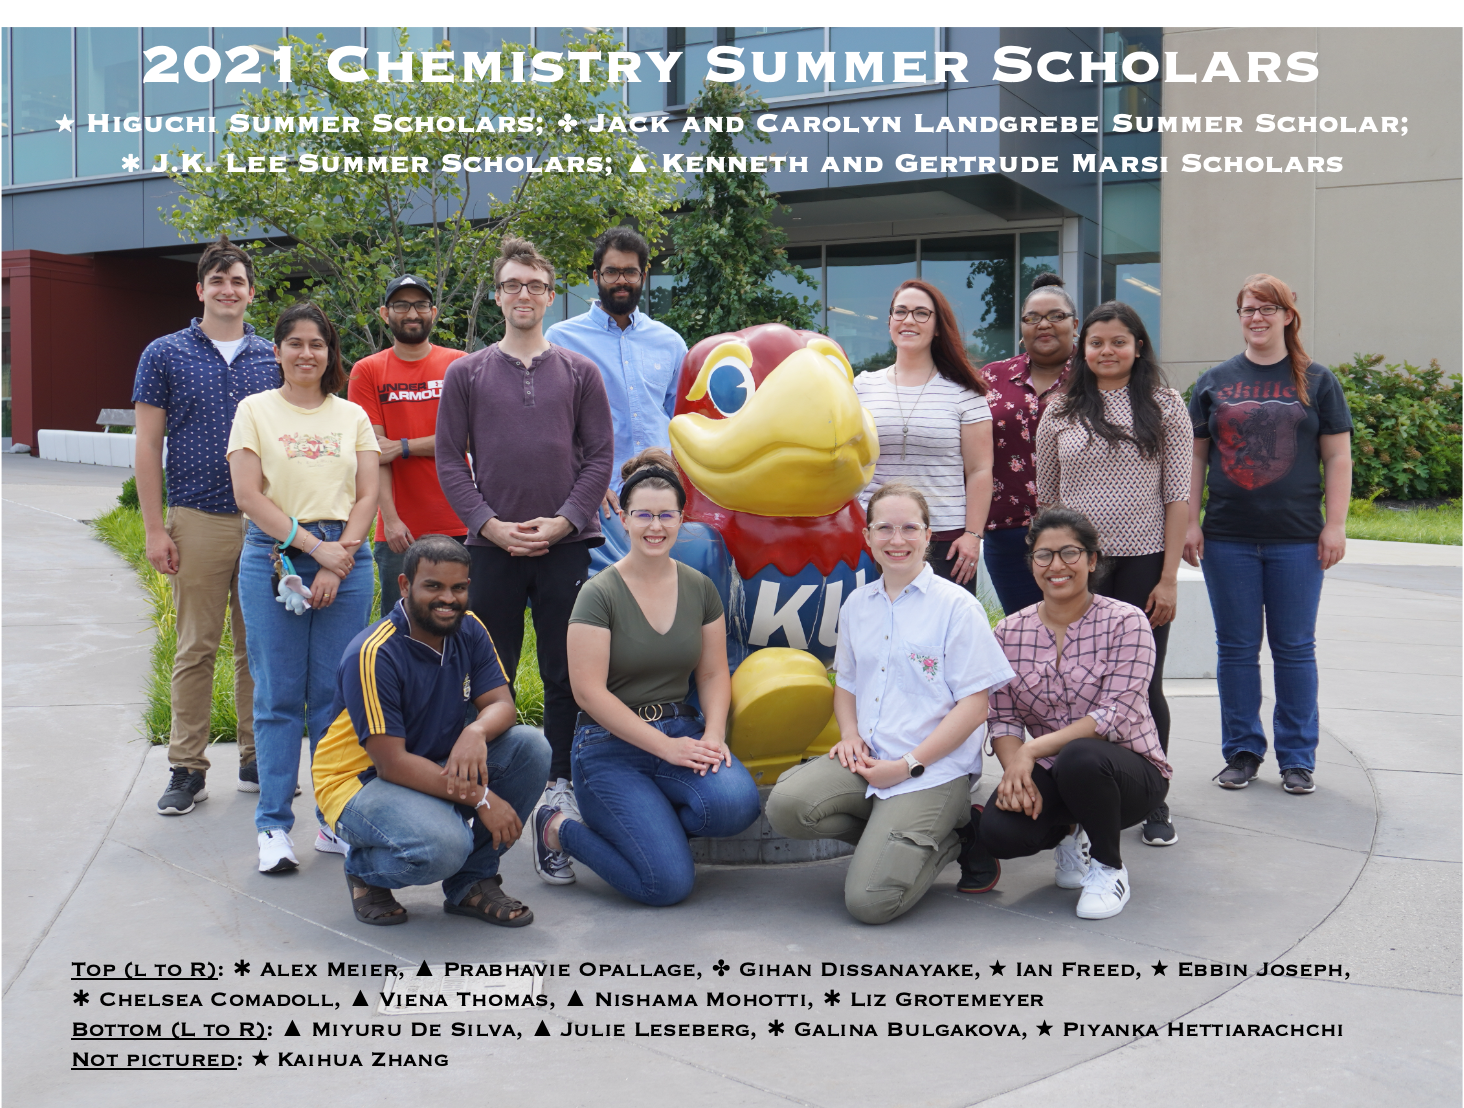 "2021 Summer Chemistry Scholars"